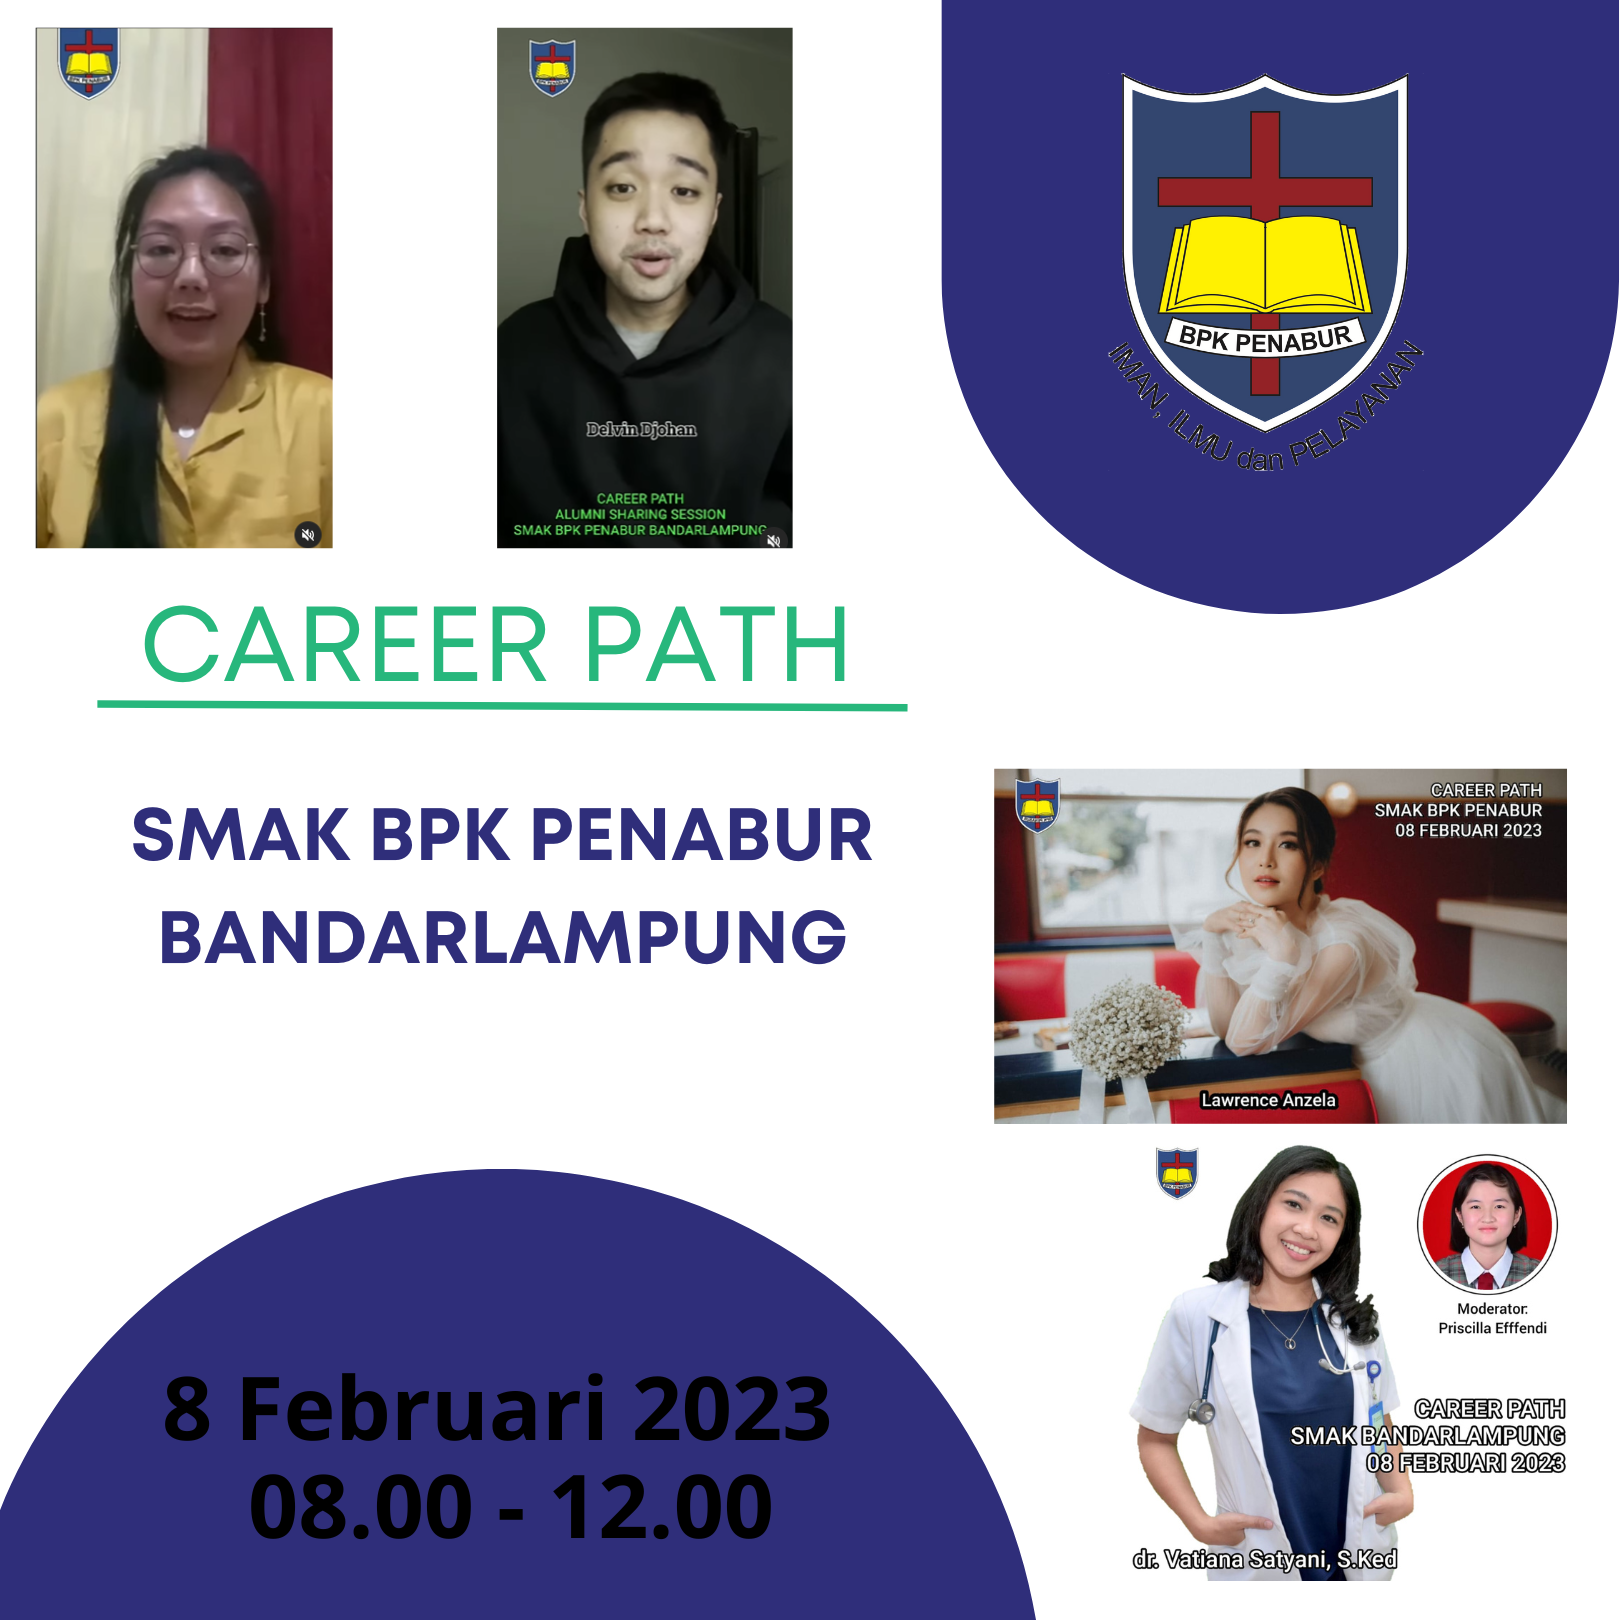 Career Path 1 